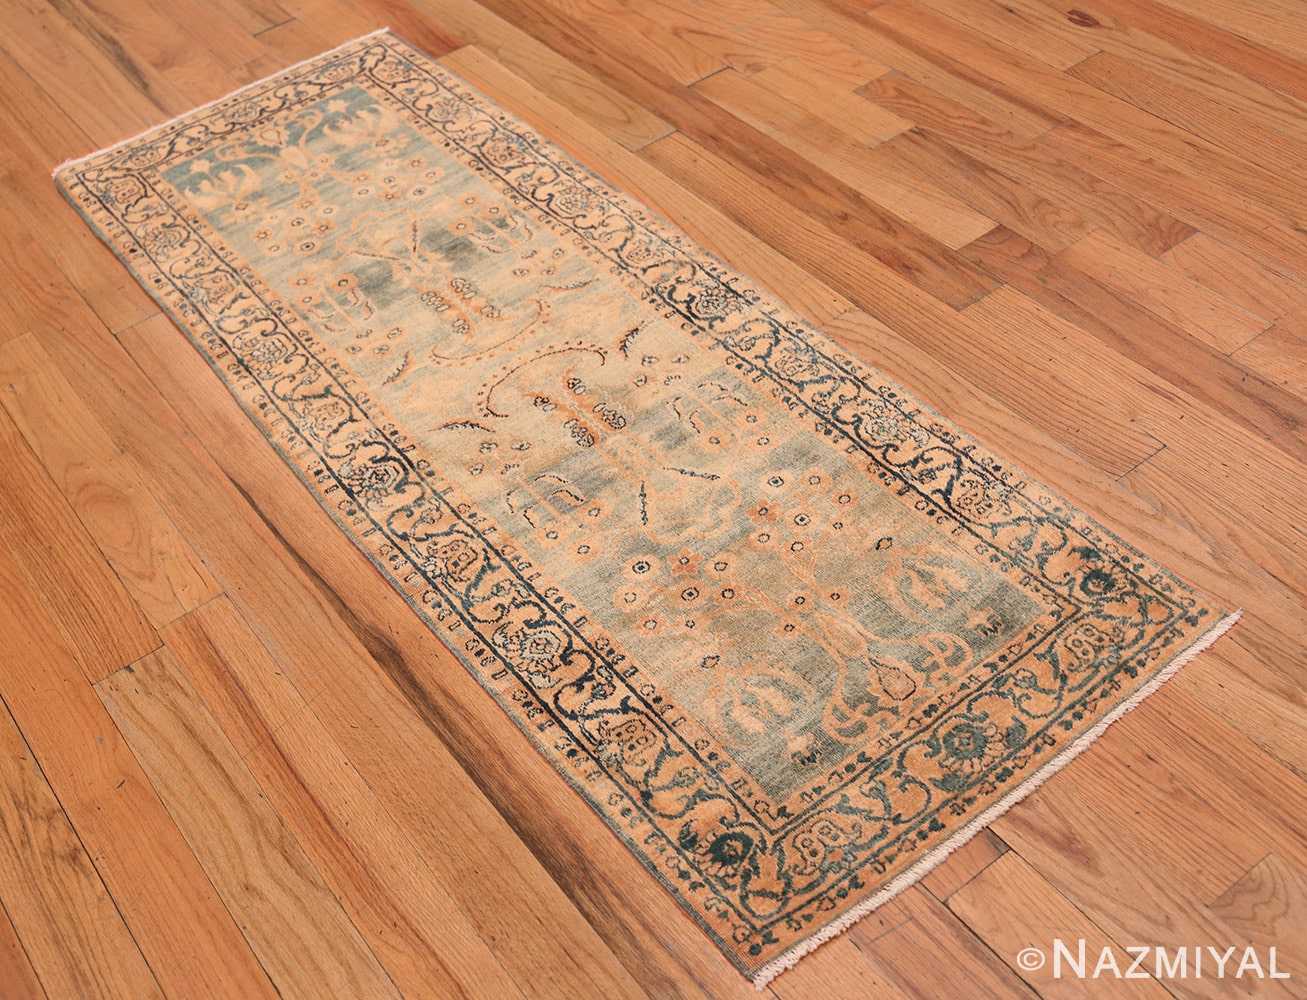 Full Antique Persian Kerman rug 70163 by Nazmiyal